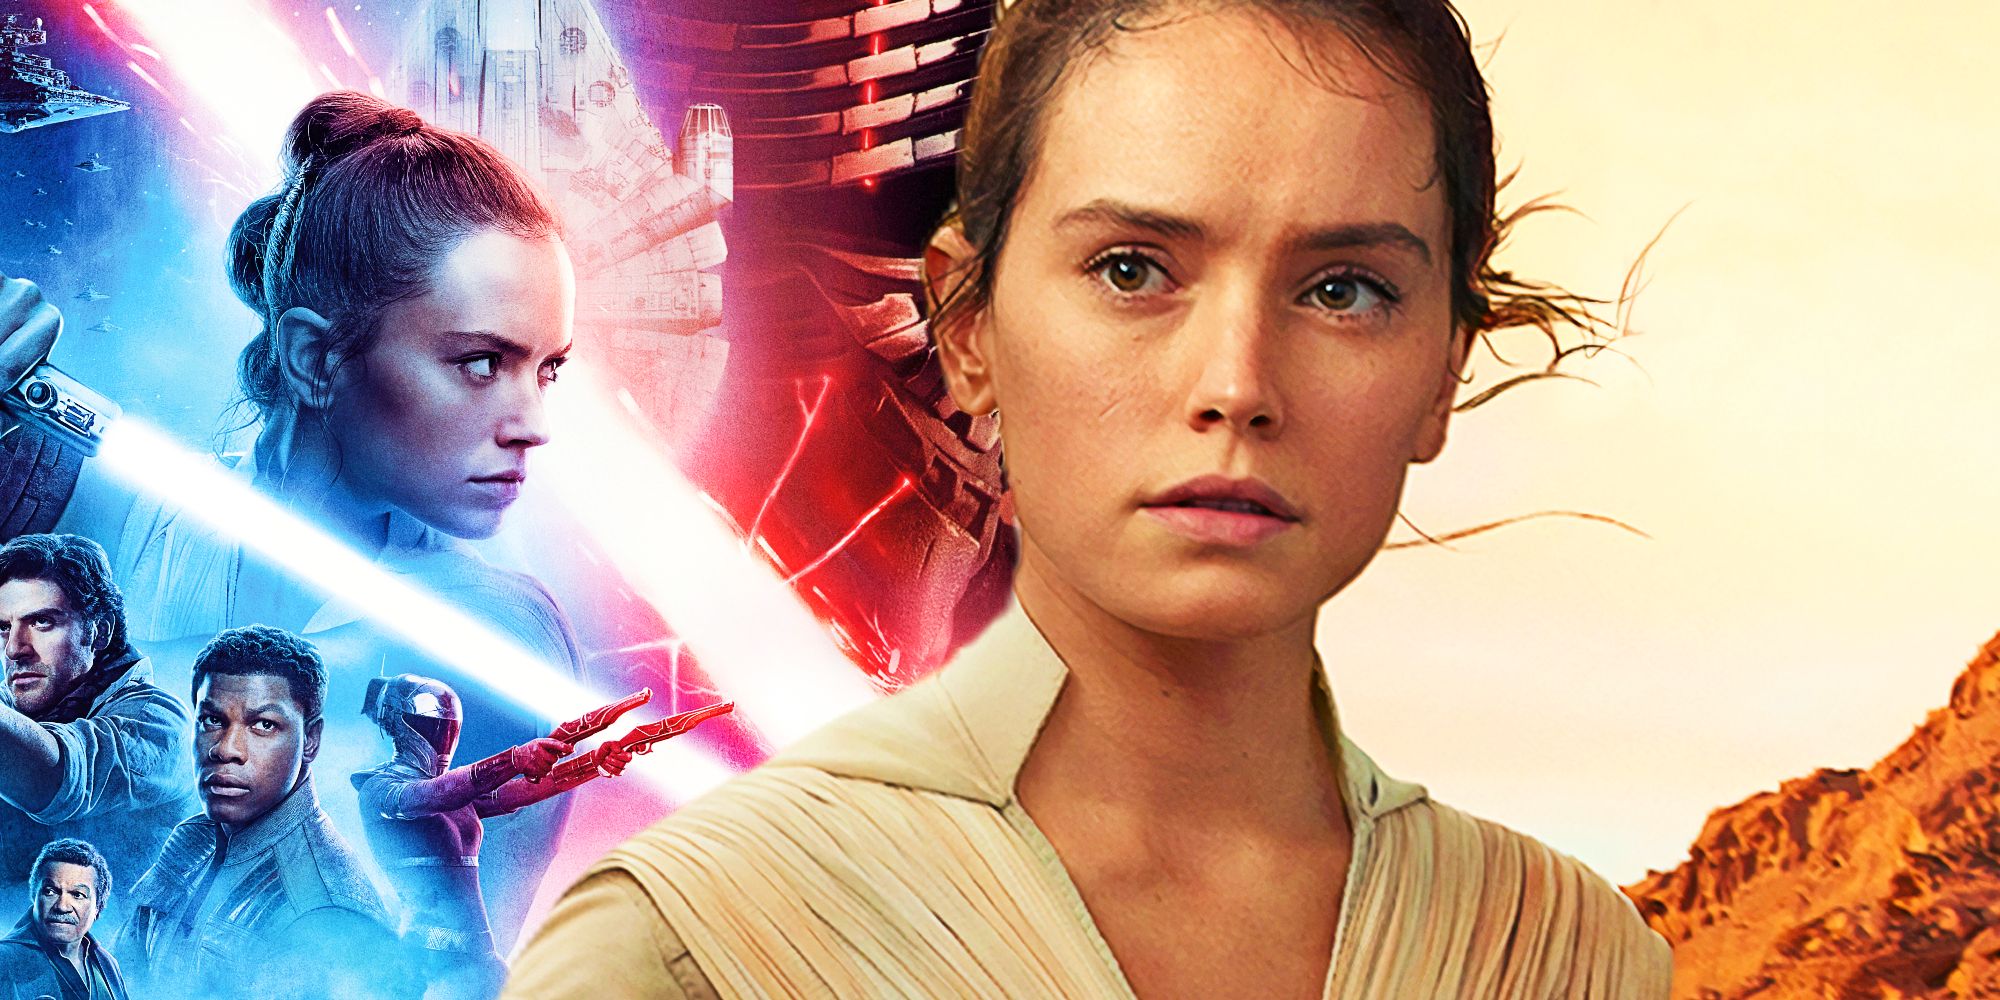 Star Wars The Rise of Skywalker's Rey